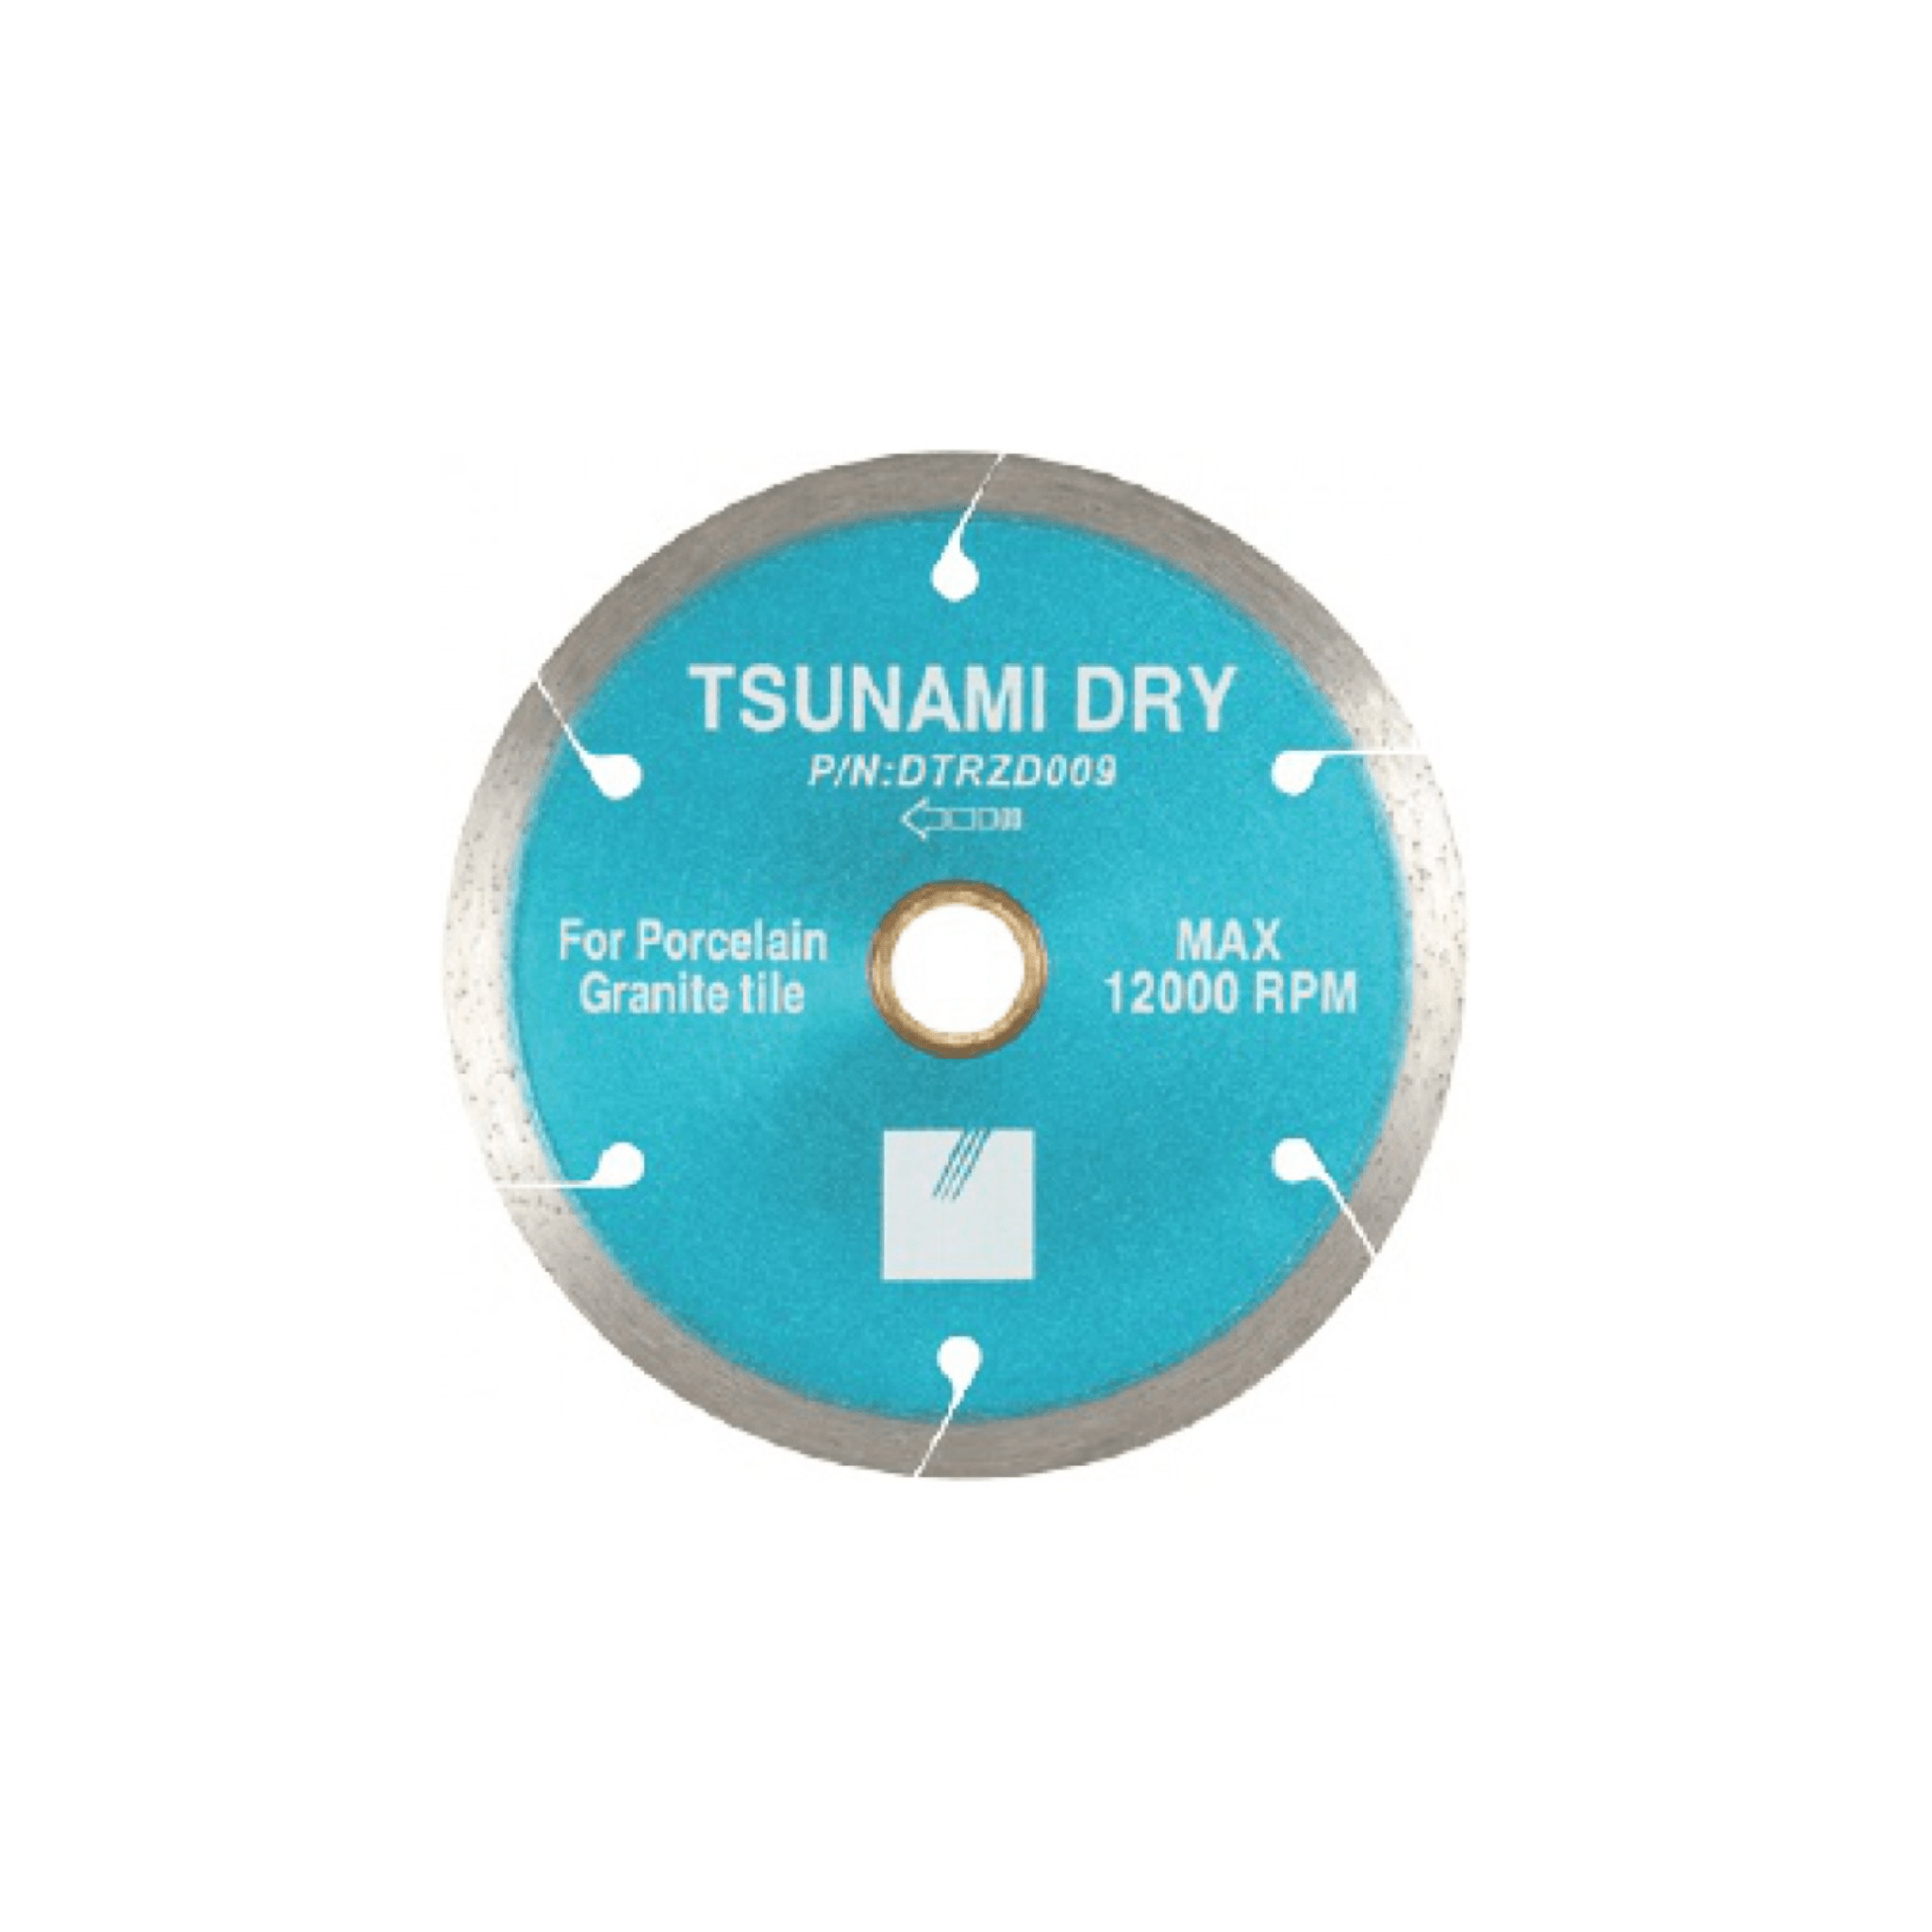 Disco Tsunami Dry 6" - Direct Stone Tool Supply, Inc